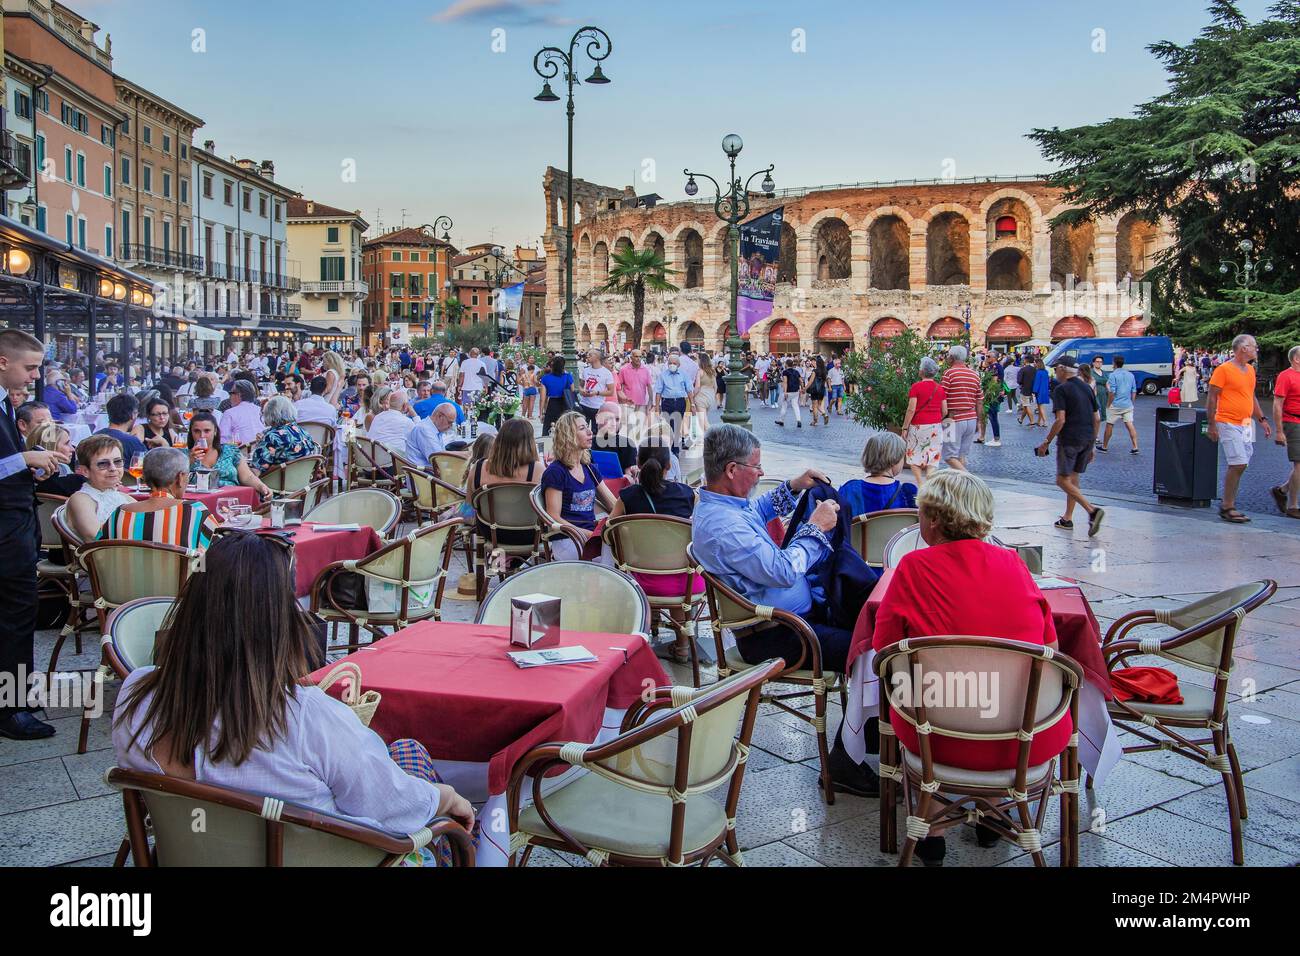 Restaurant terraces in Piazza Bra in front of the Arena di Verona, Verona, Veneto, Northern Italy, Italy Stock Photo